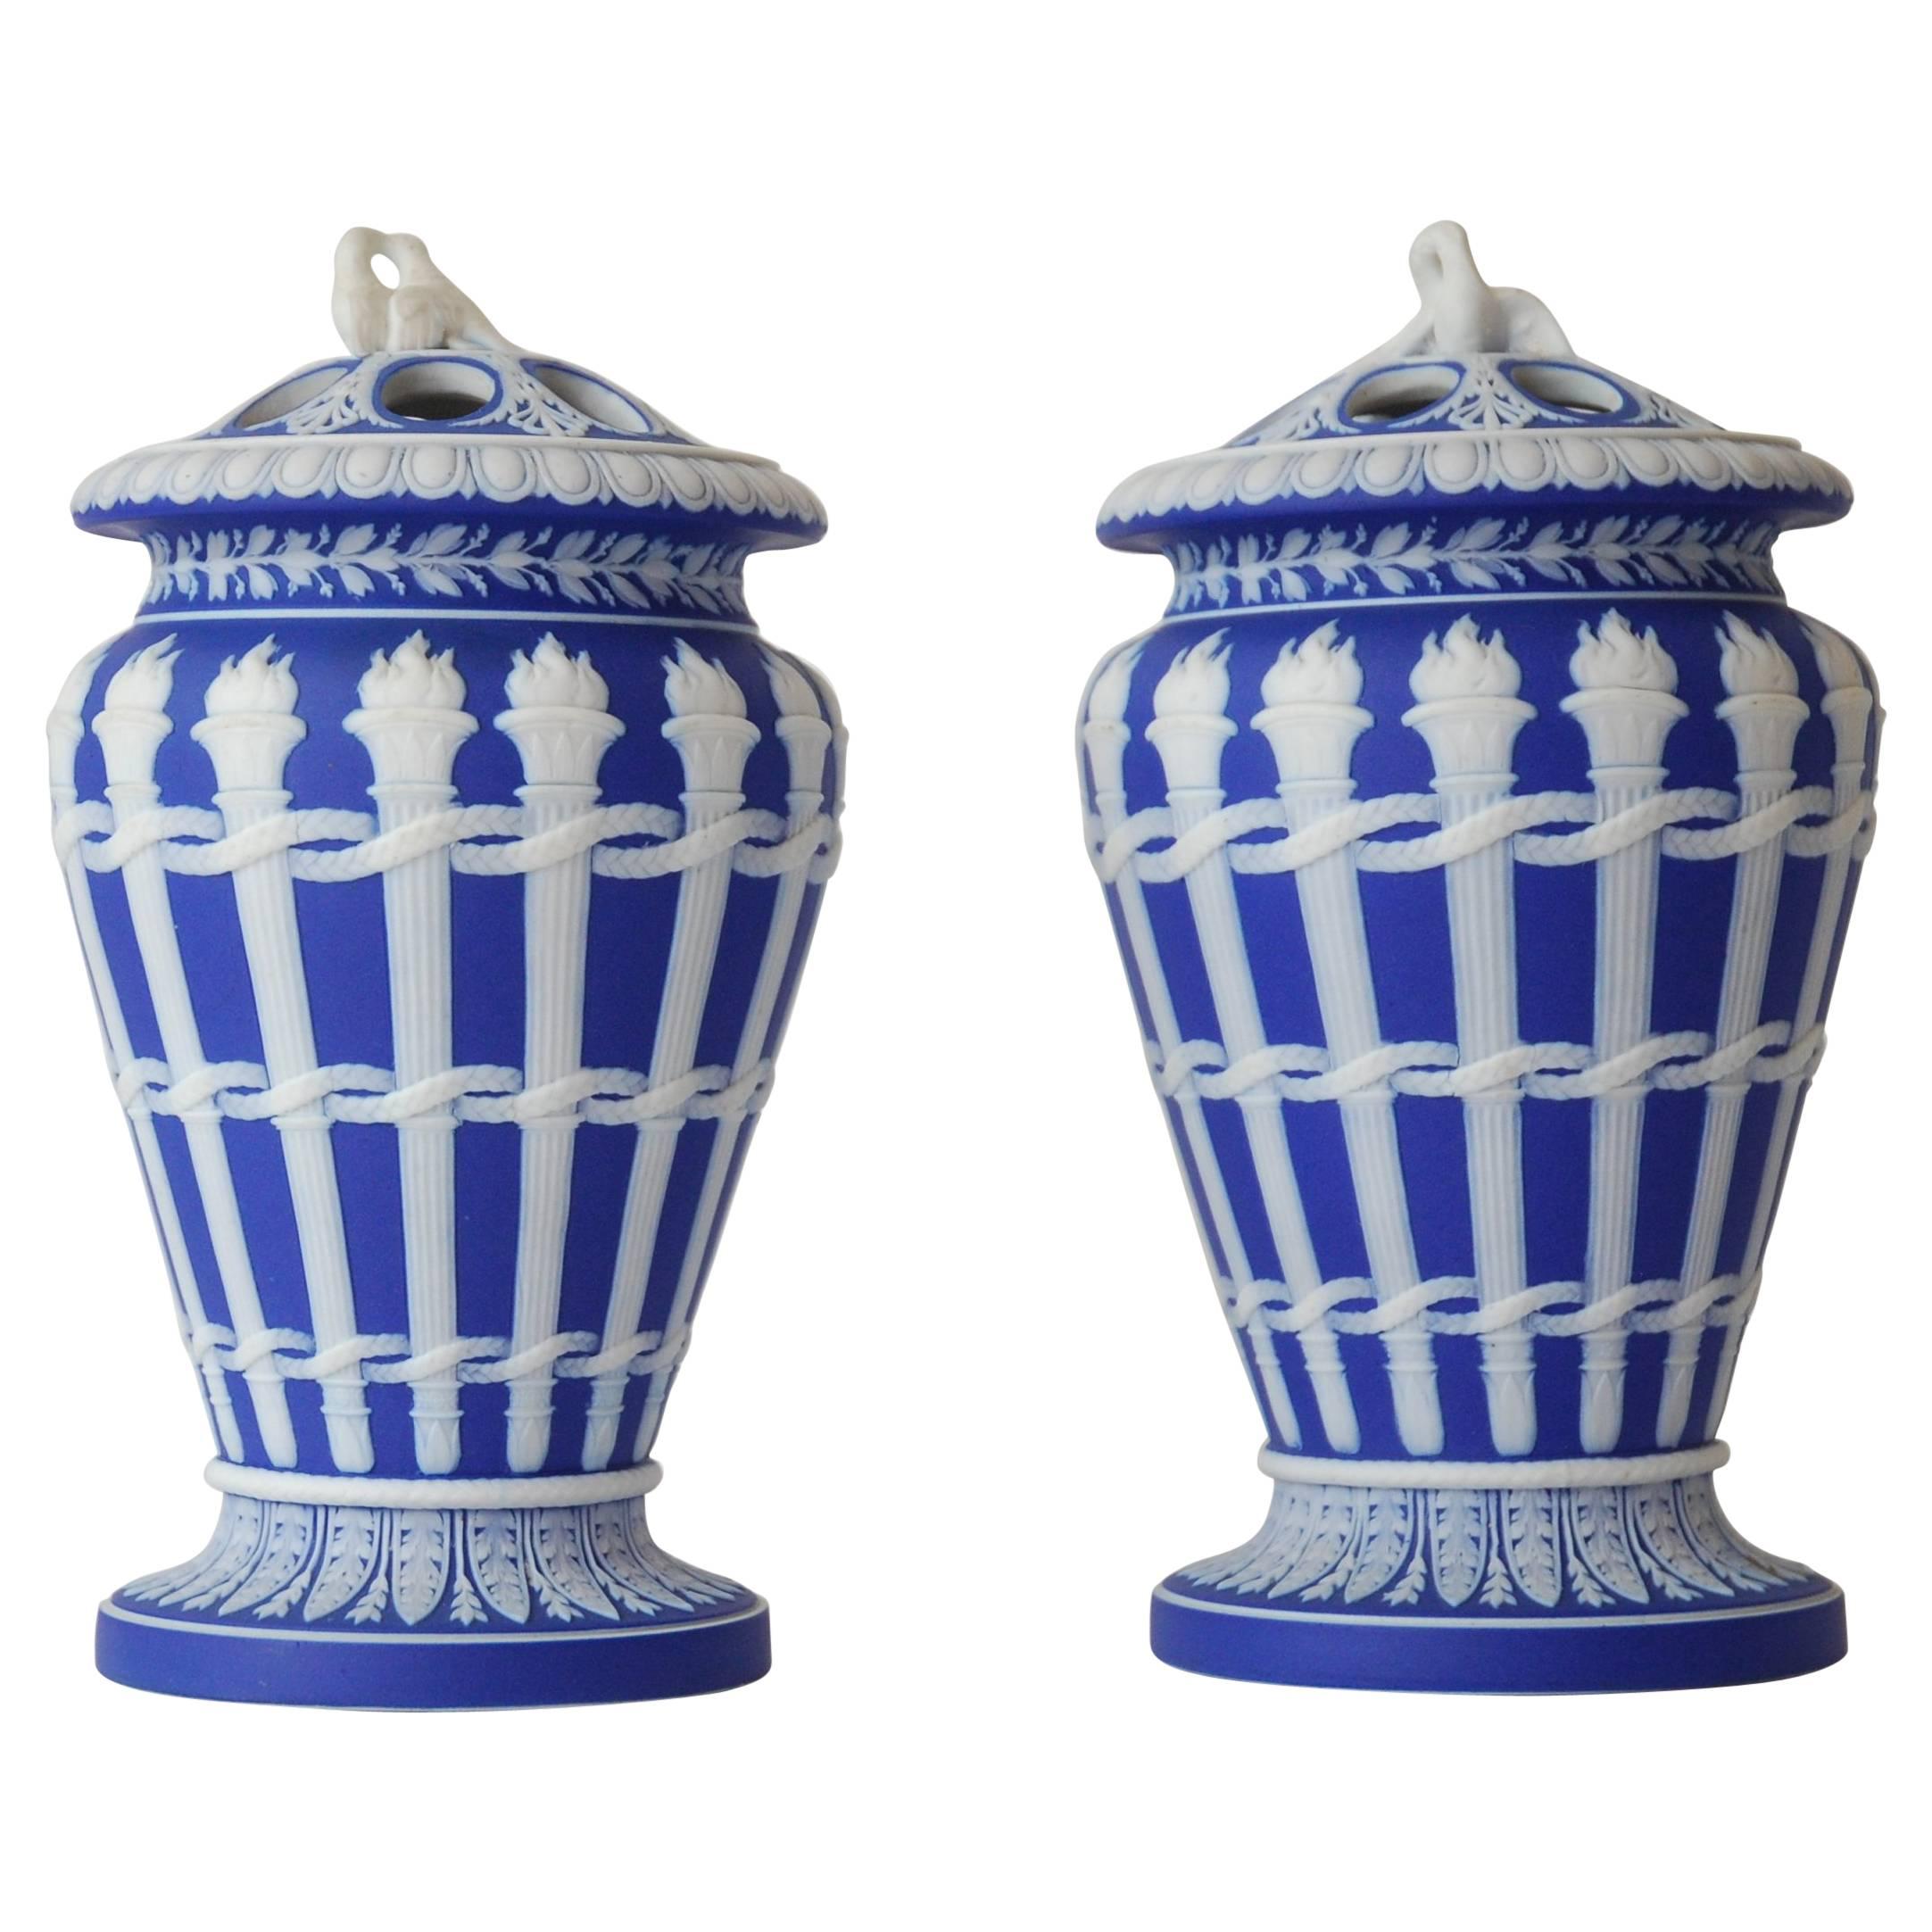 Pair of Jasperware Torch Vases, Wedgwood, circa 1820